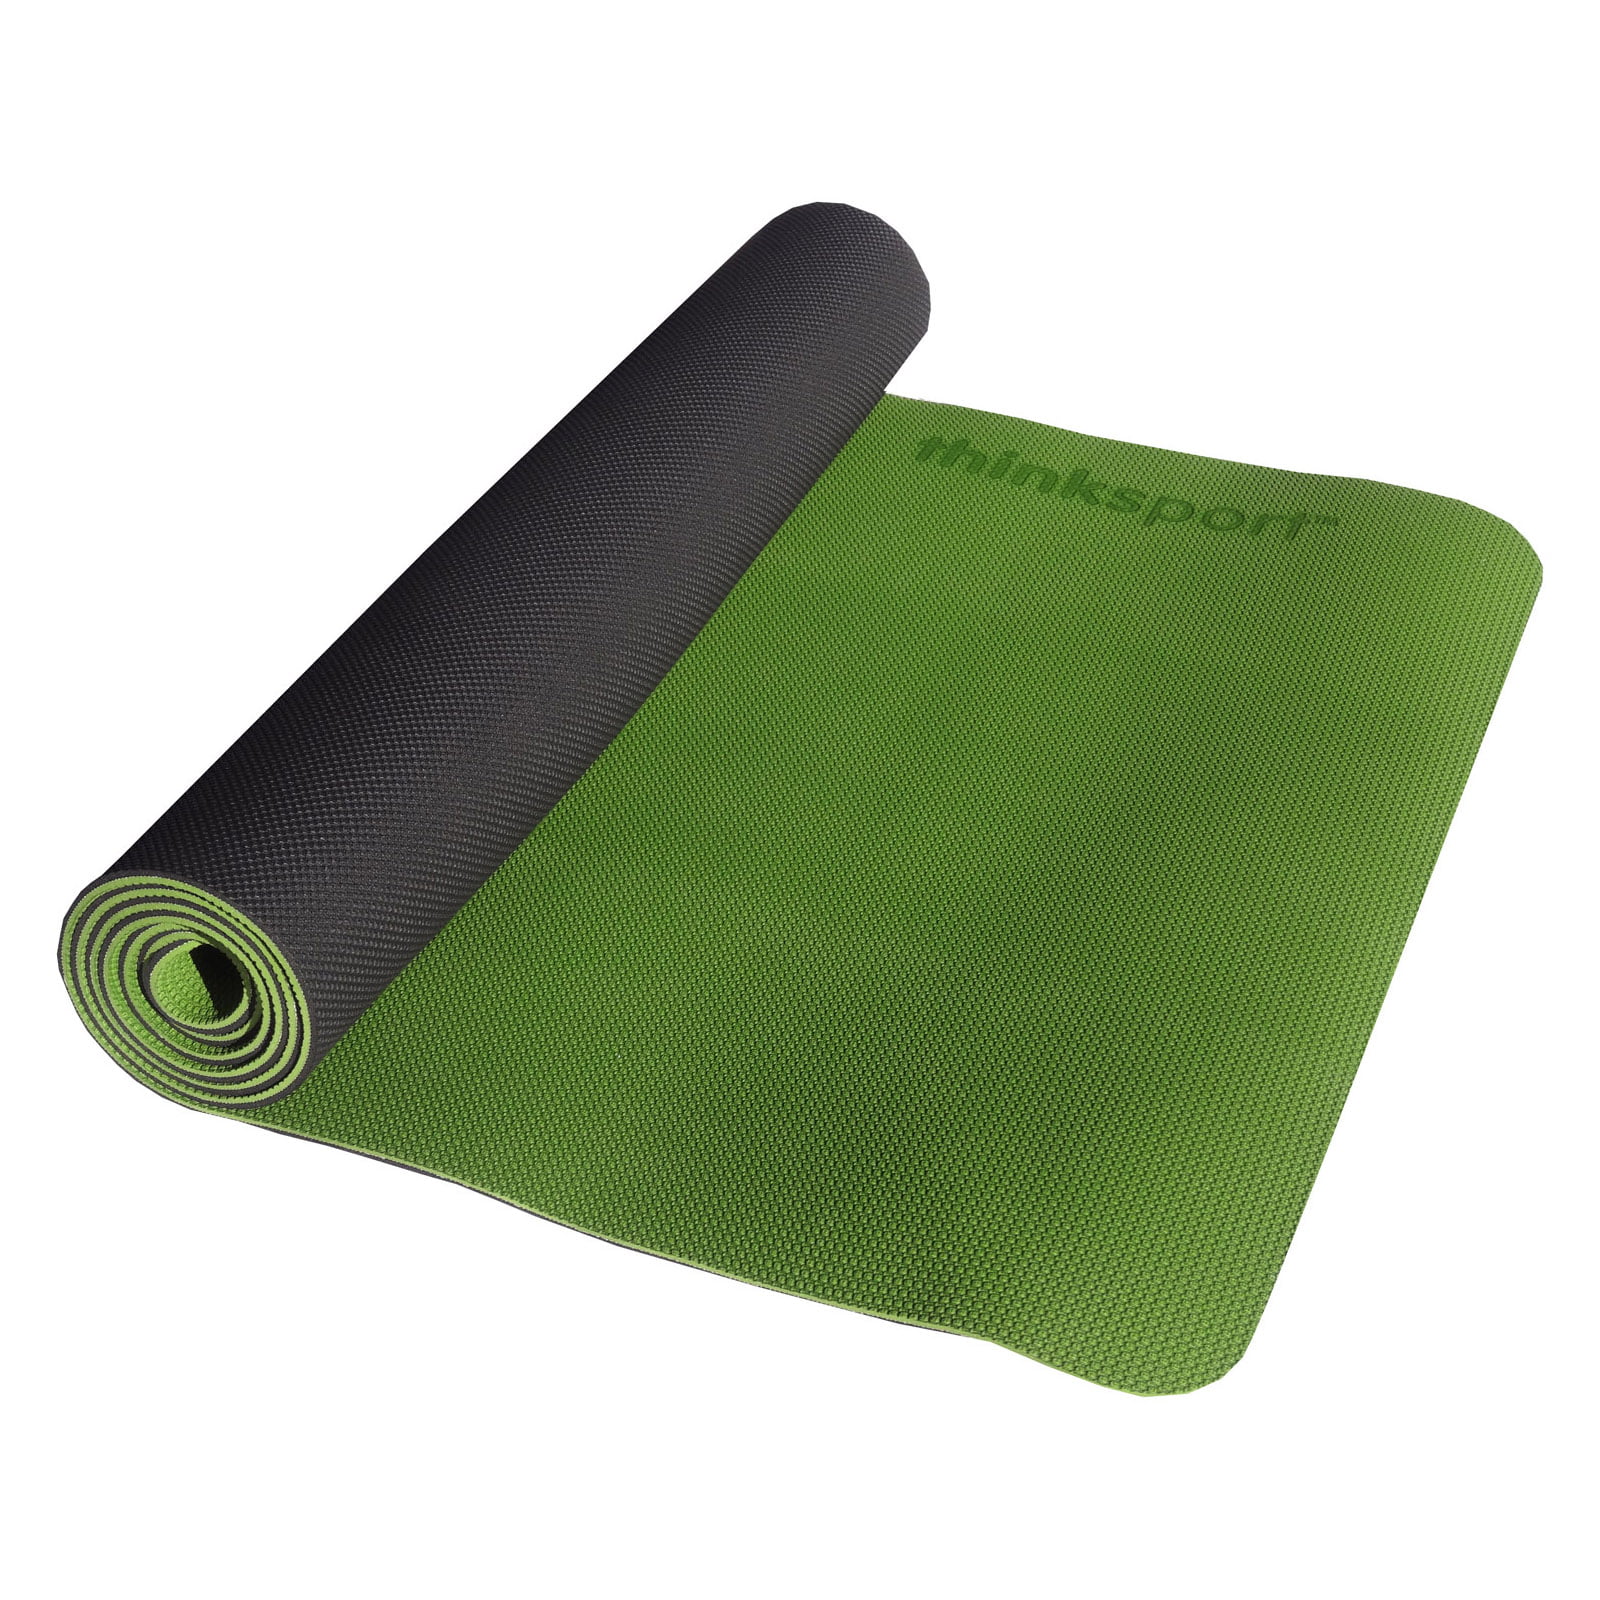 Thinksport Yoga Mat - Black/Green